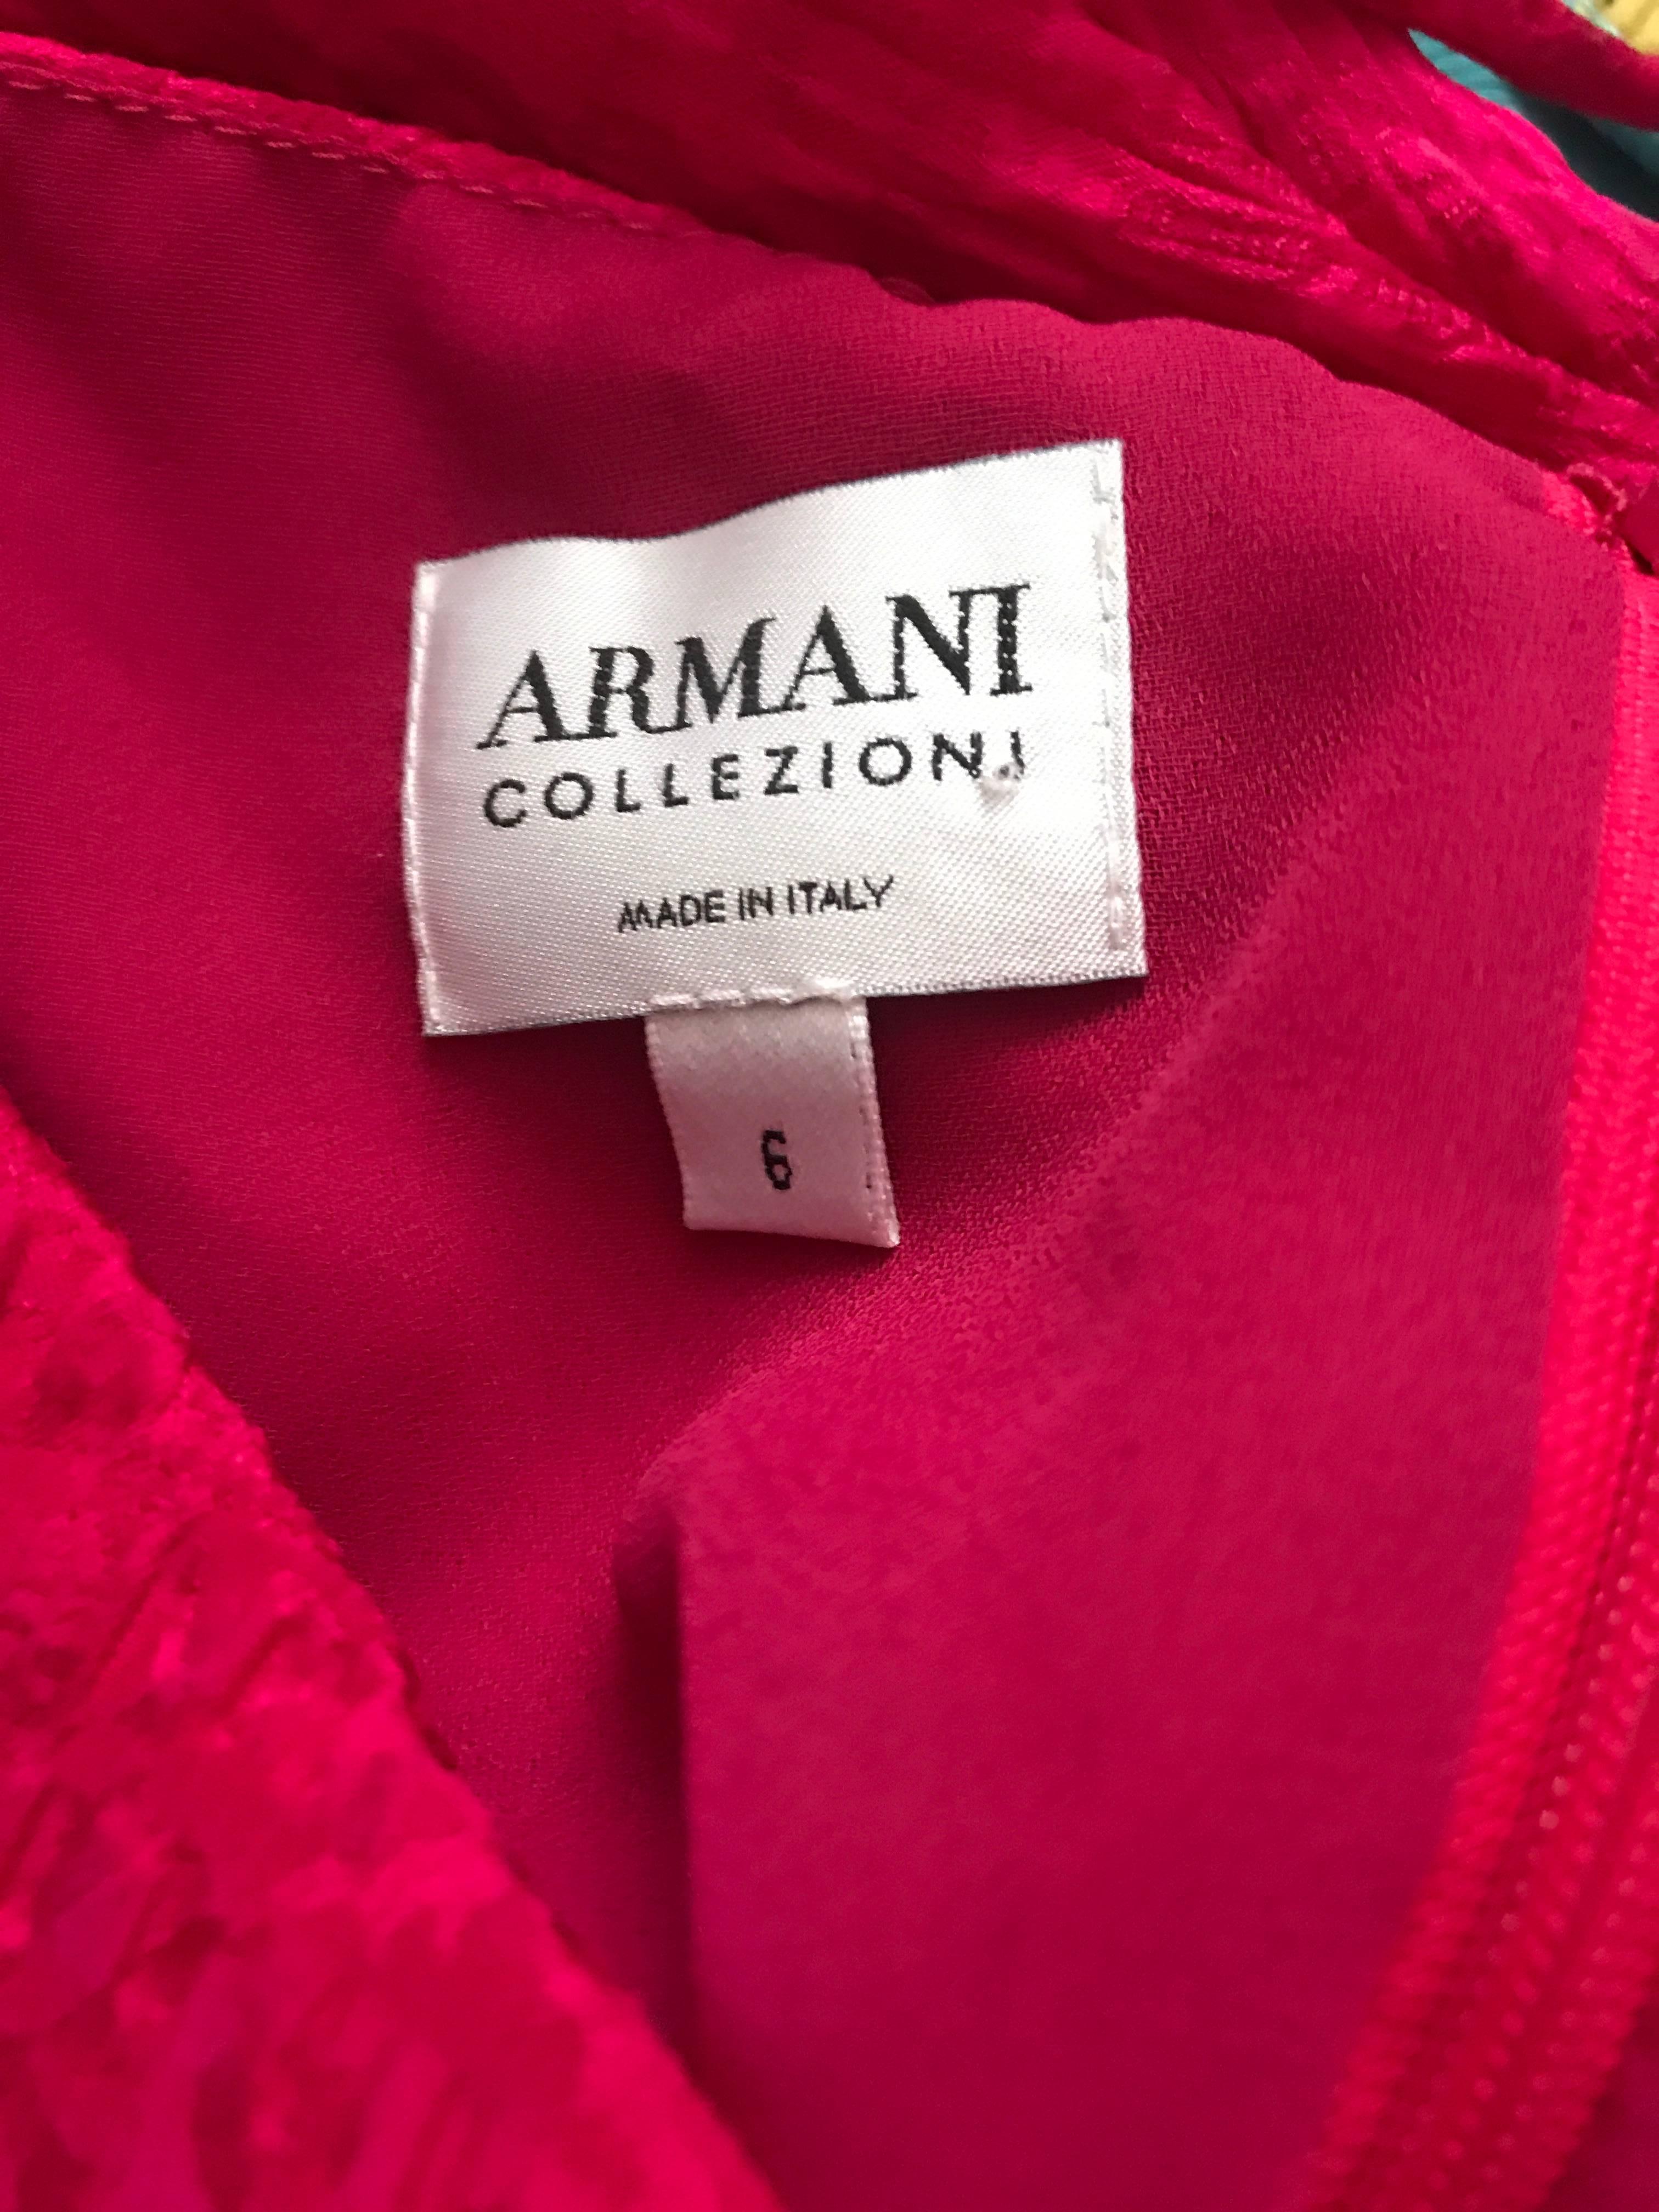 Giorgio Armani - Robe-culotte en soie vintage rose framboise et fuchsia, taille 6, années 1990 en vente 4